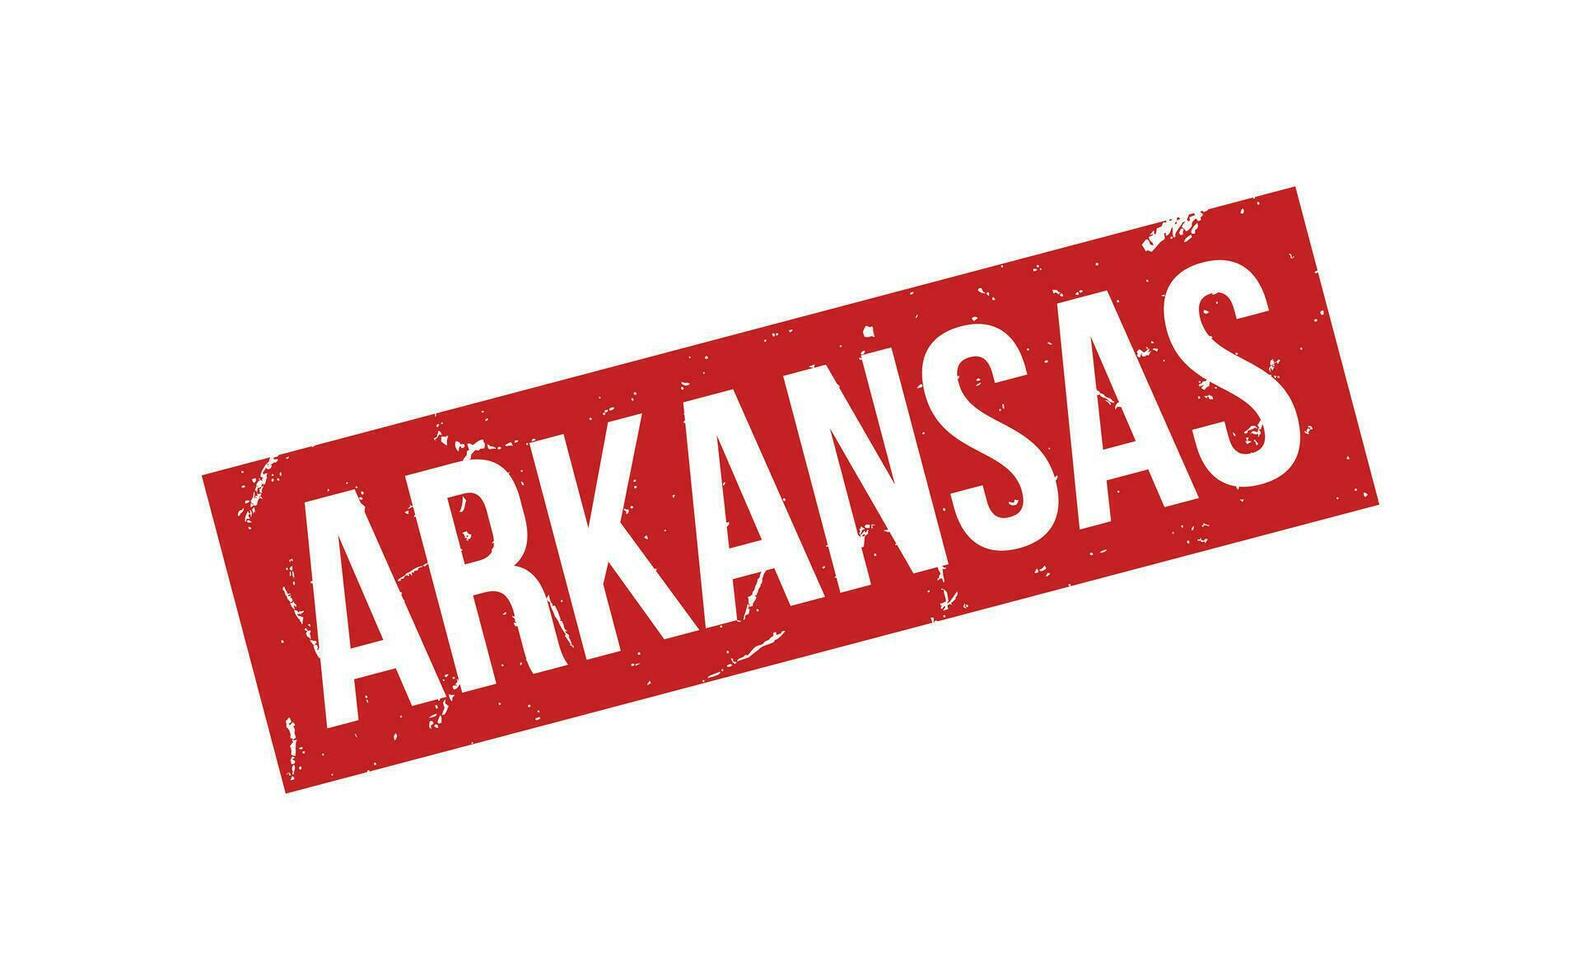 Arkansas borracha carimbo foca vetor